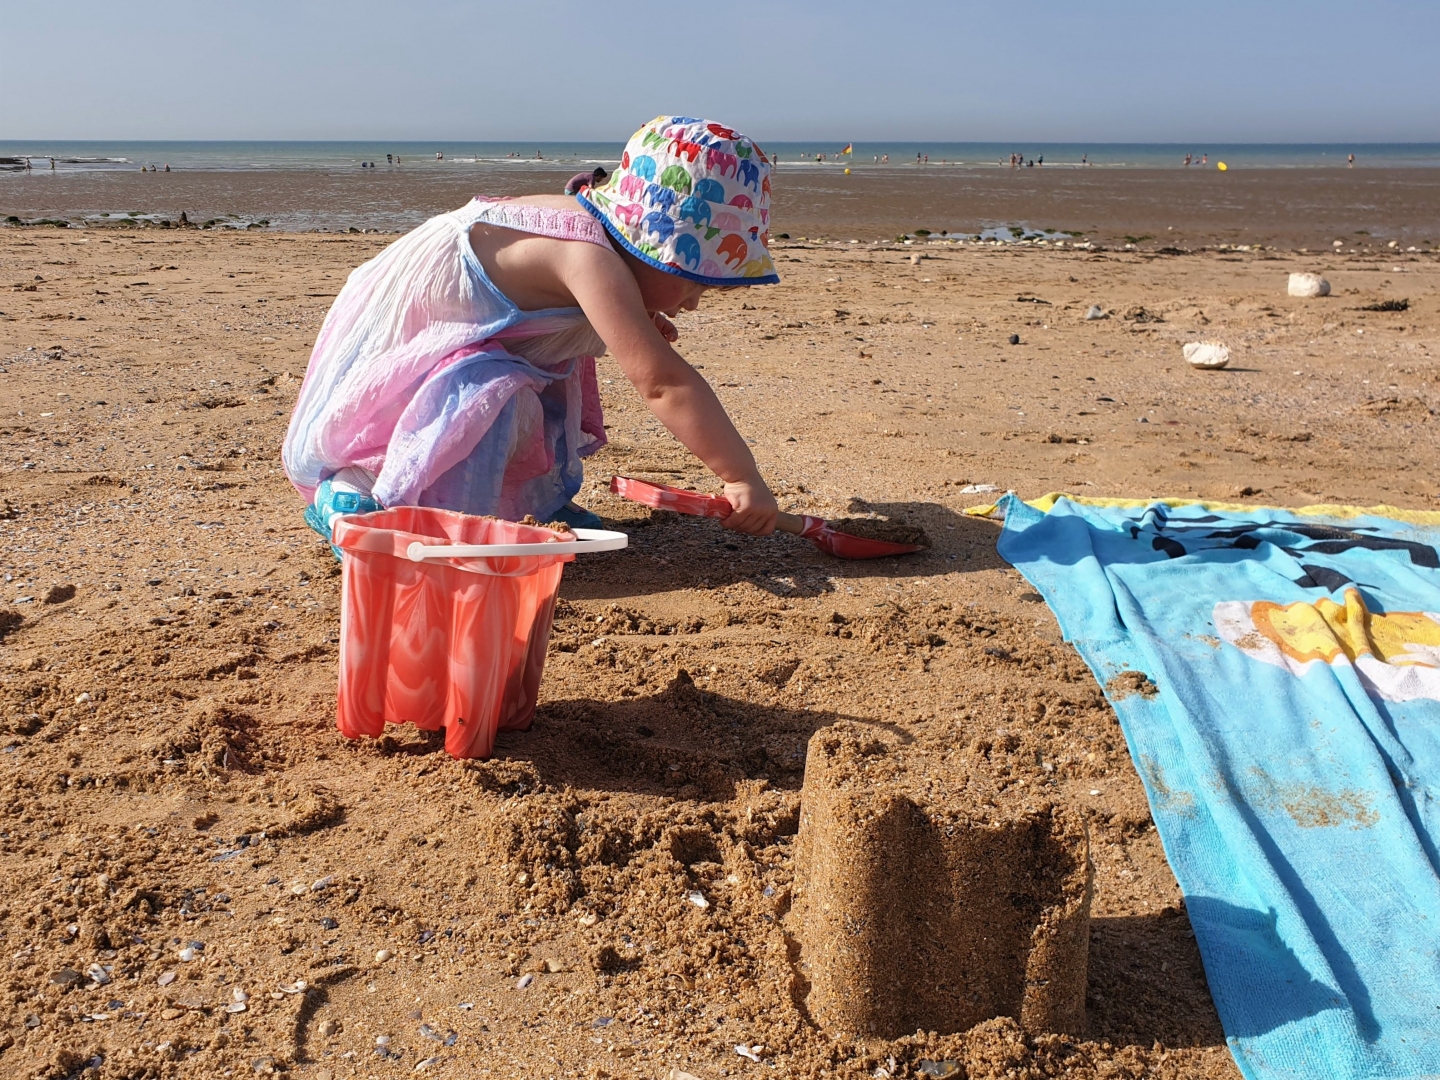 Toddler building sandcastles on Westgate-on-sea beach near Margate